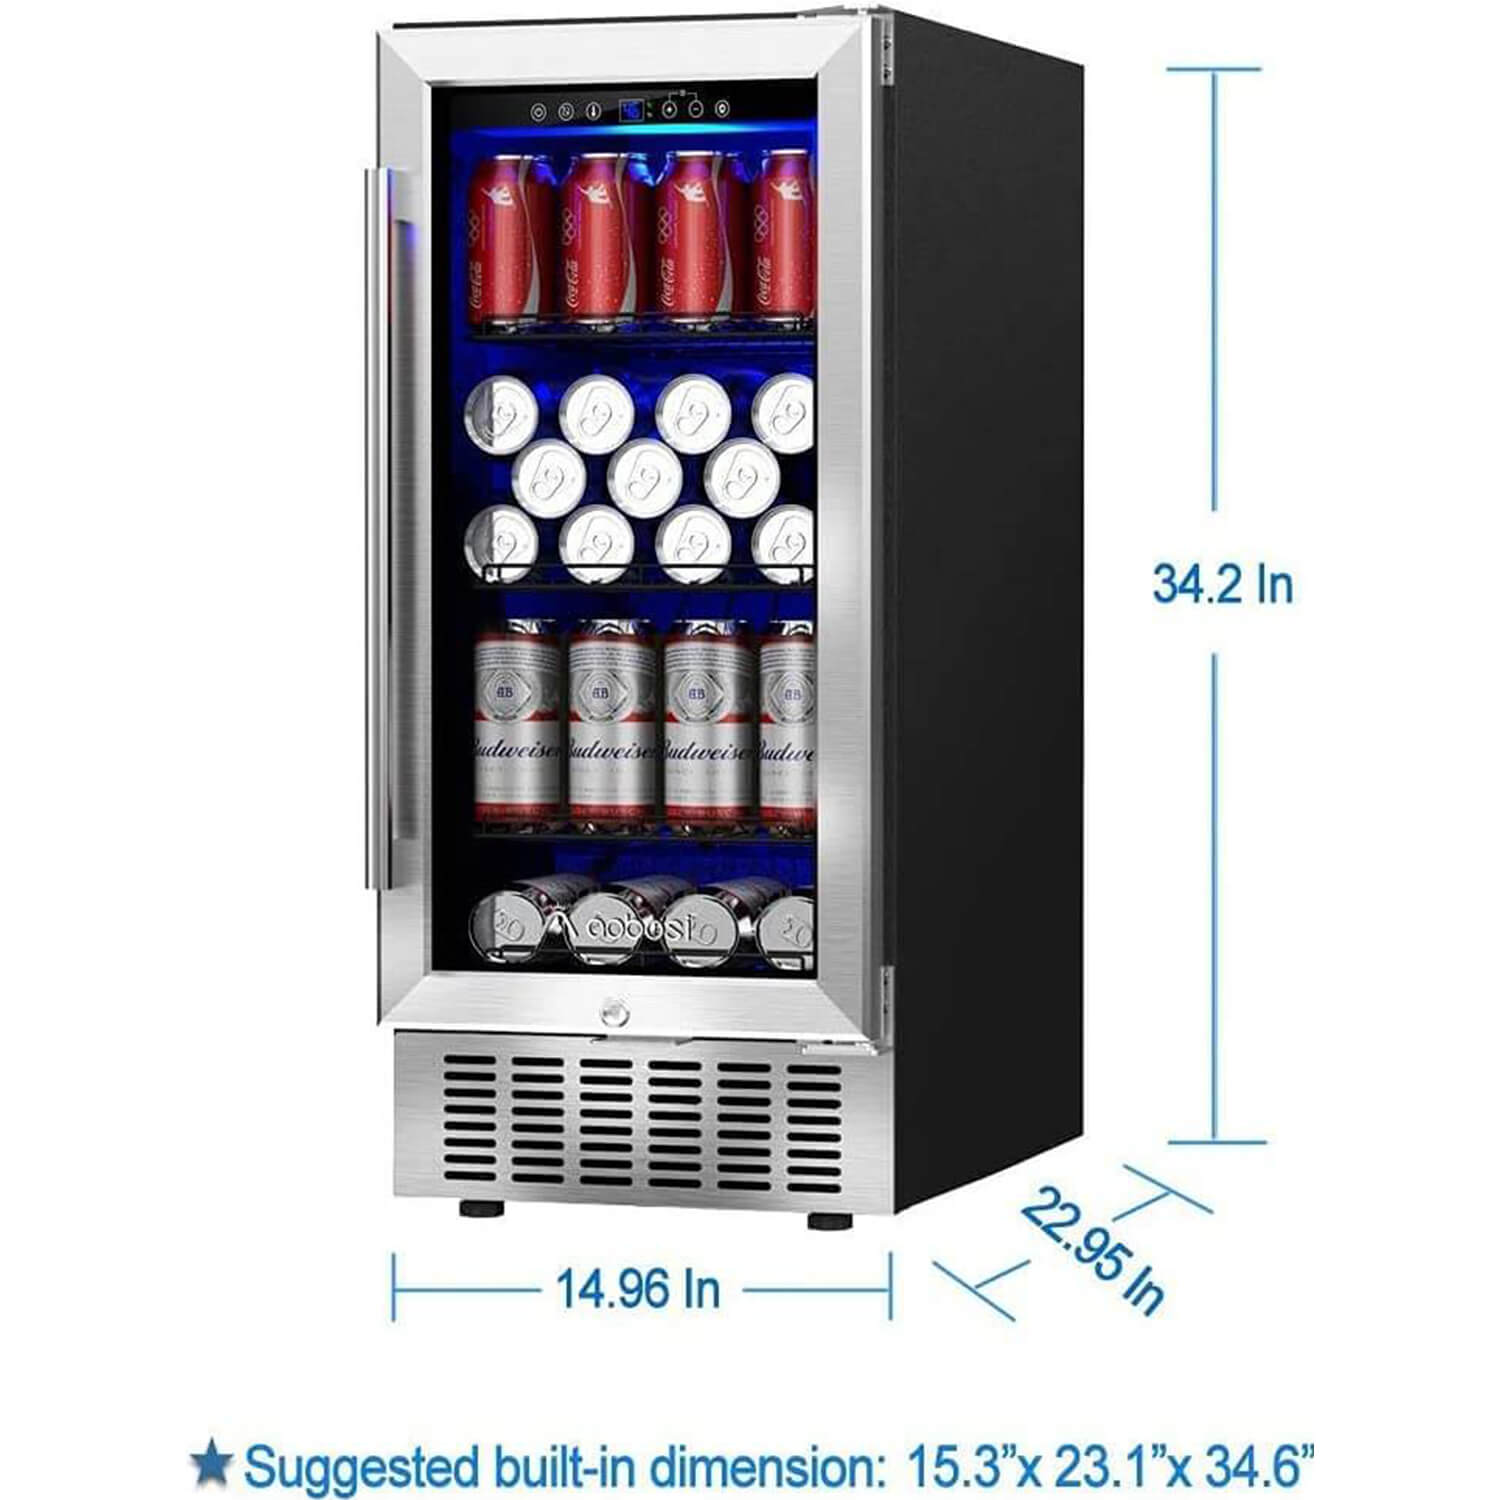 AAOBOSI Beverage Refrigerator 15 Inch 94 Cans Built-in Beverage Cooler JC-85C